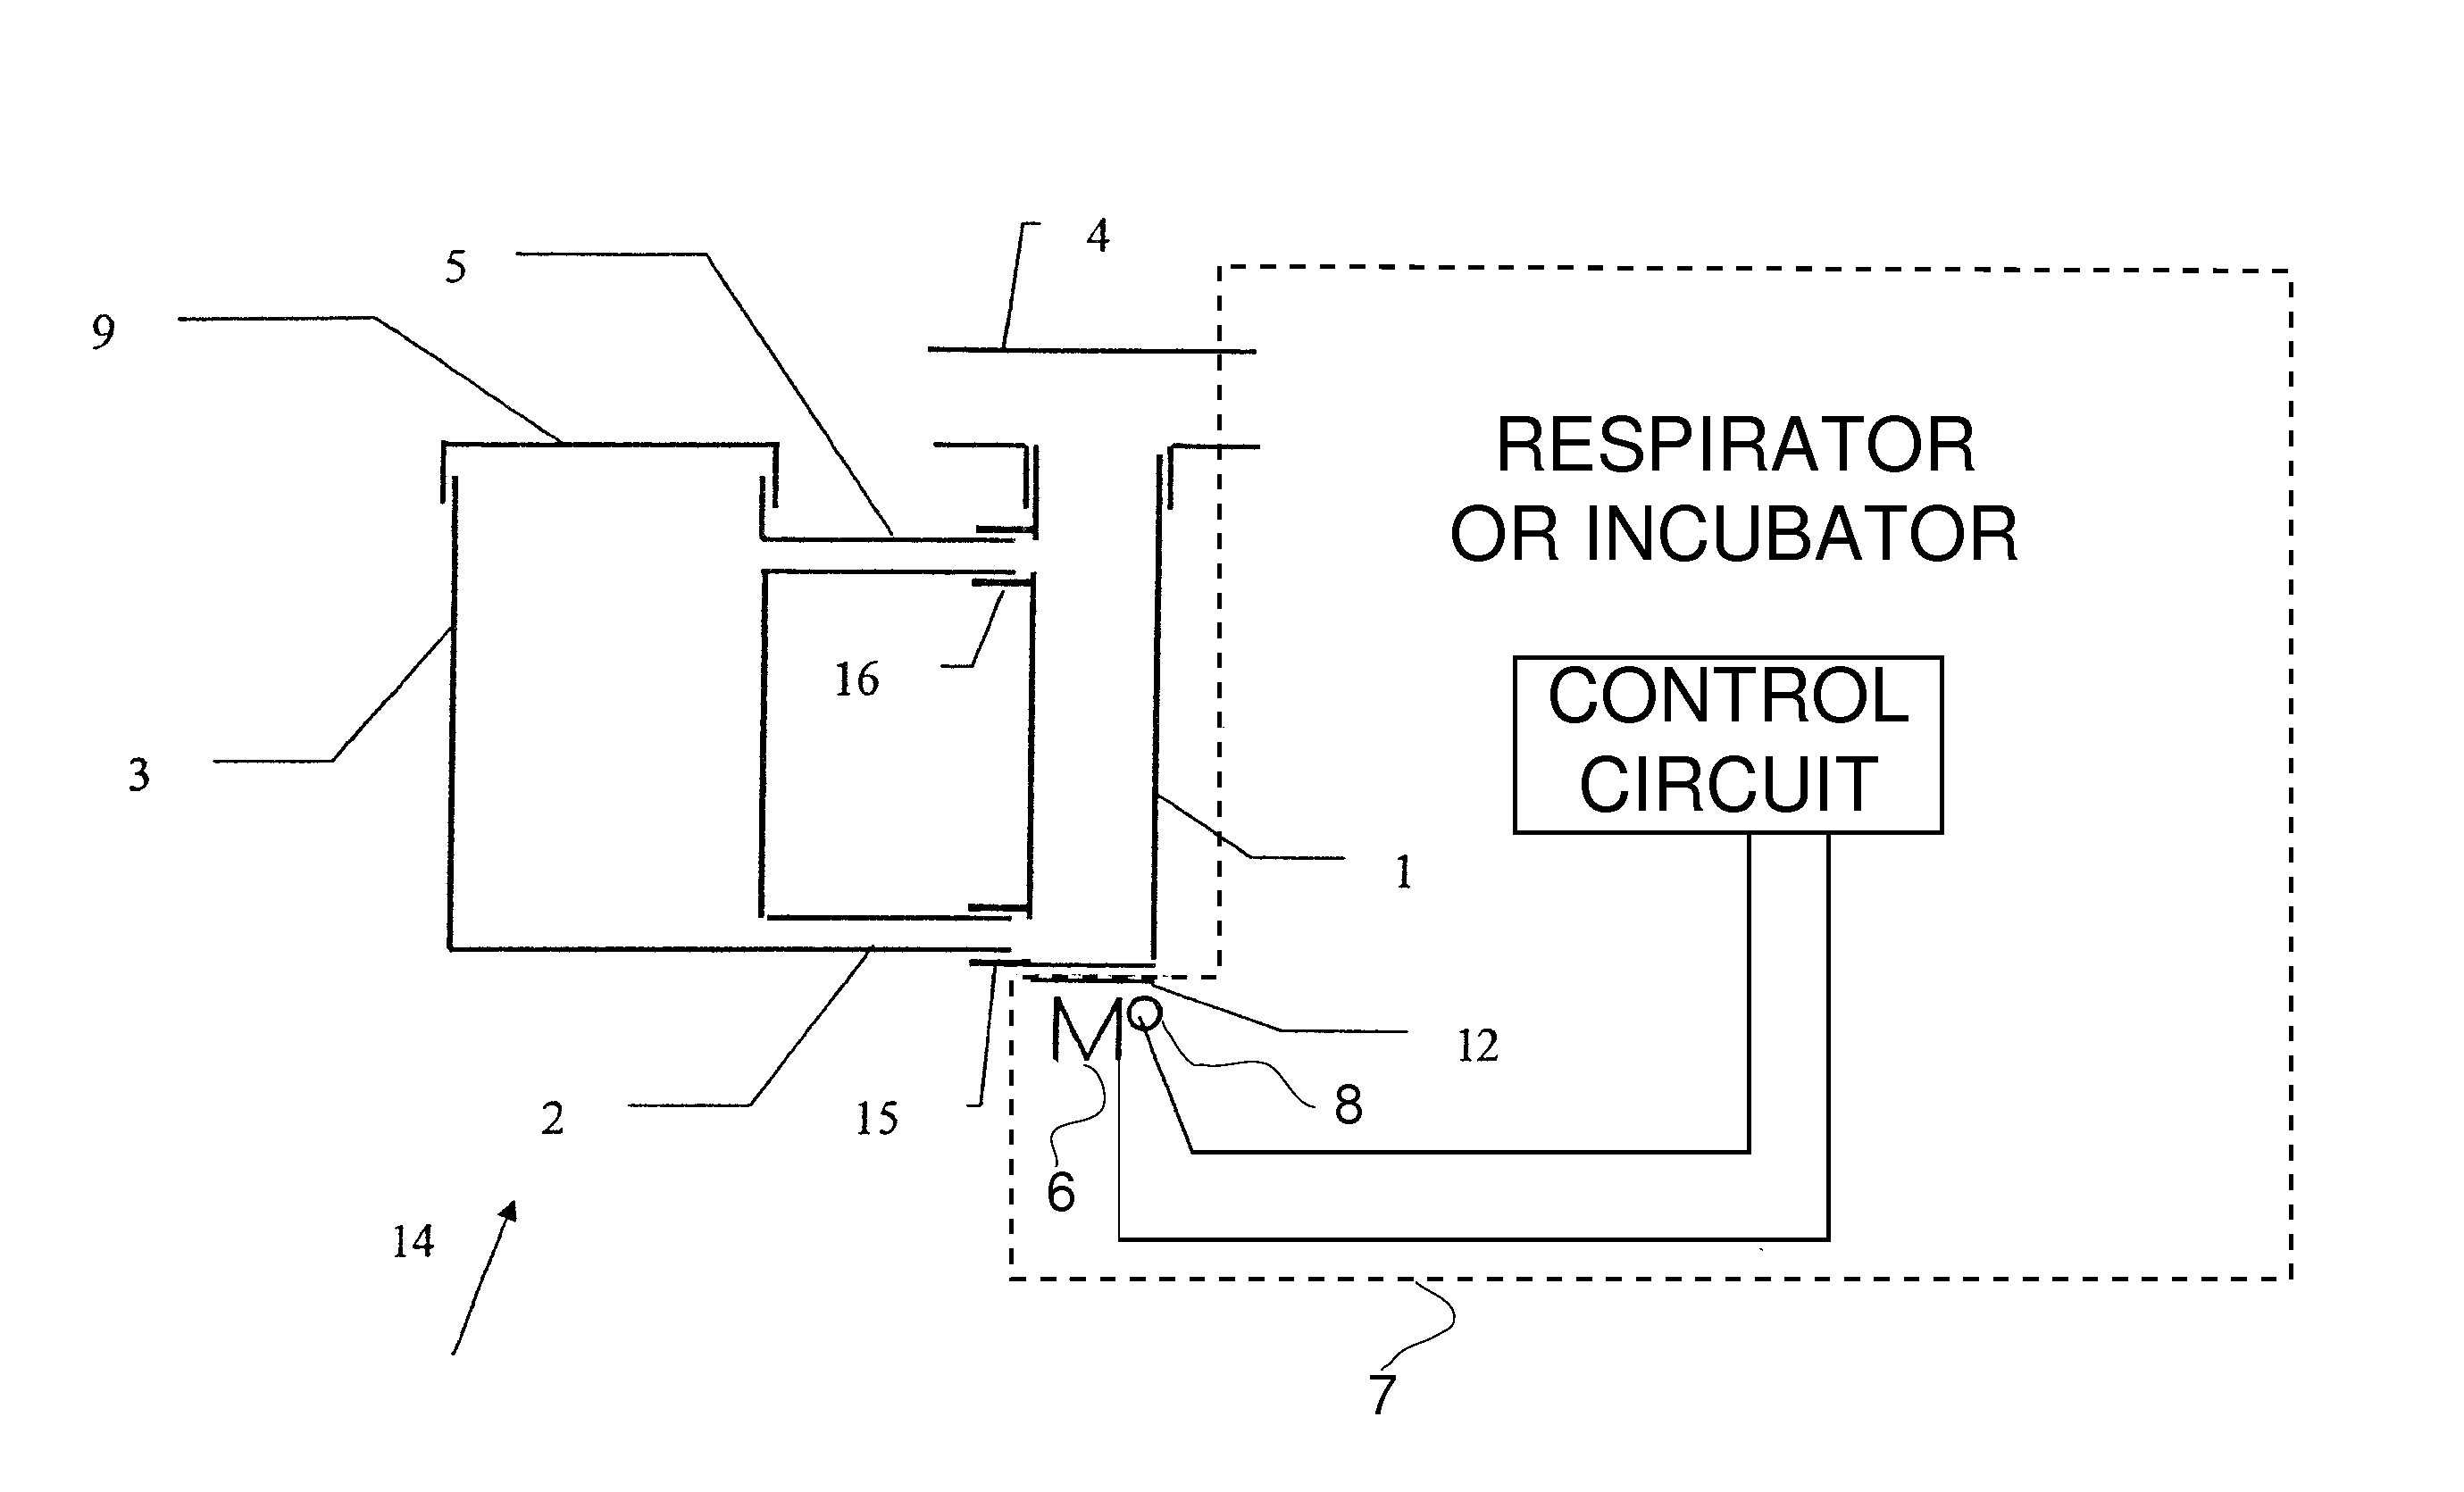 Air humidifier for respirators and incubators